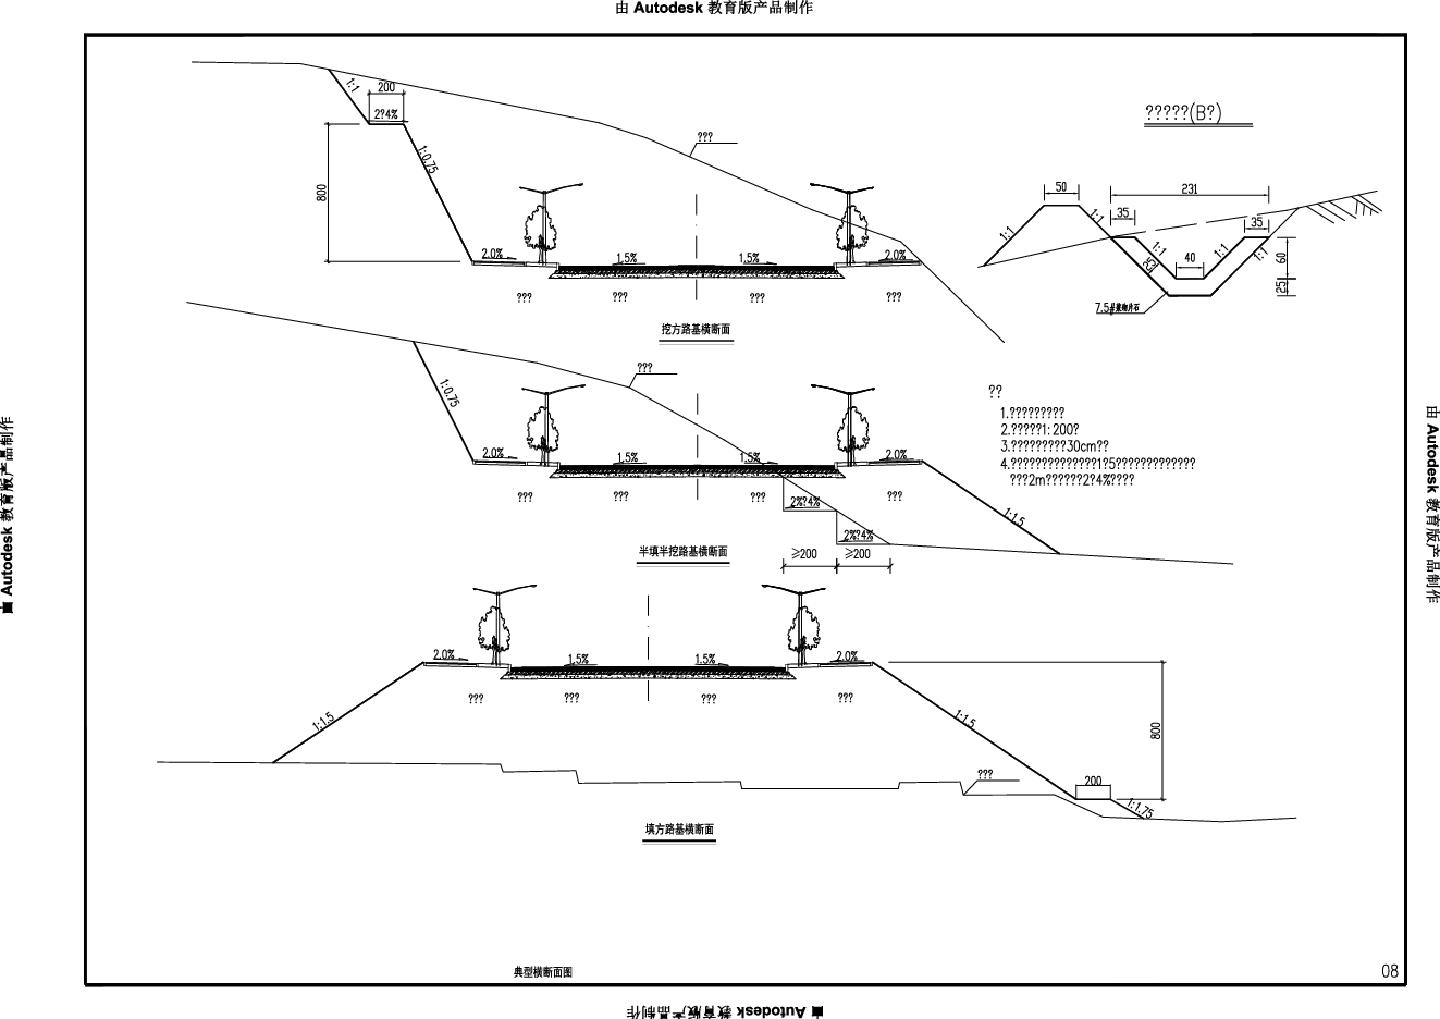 LS-08 典型横断面图CAD图.dwg